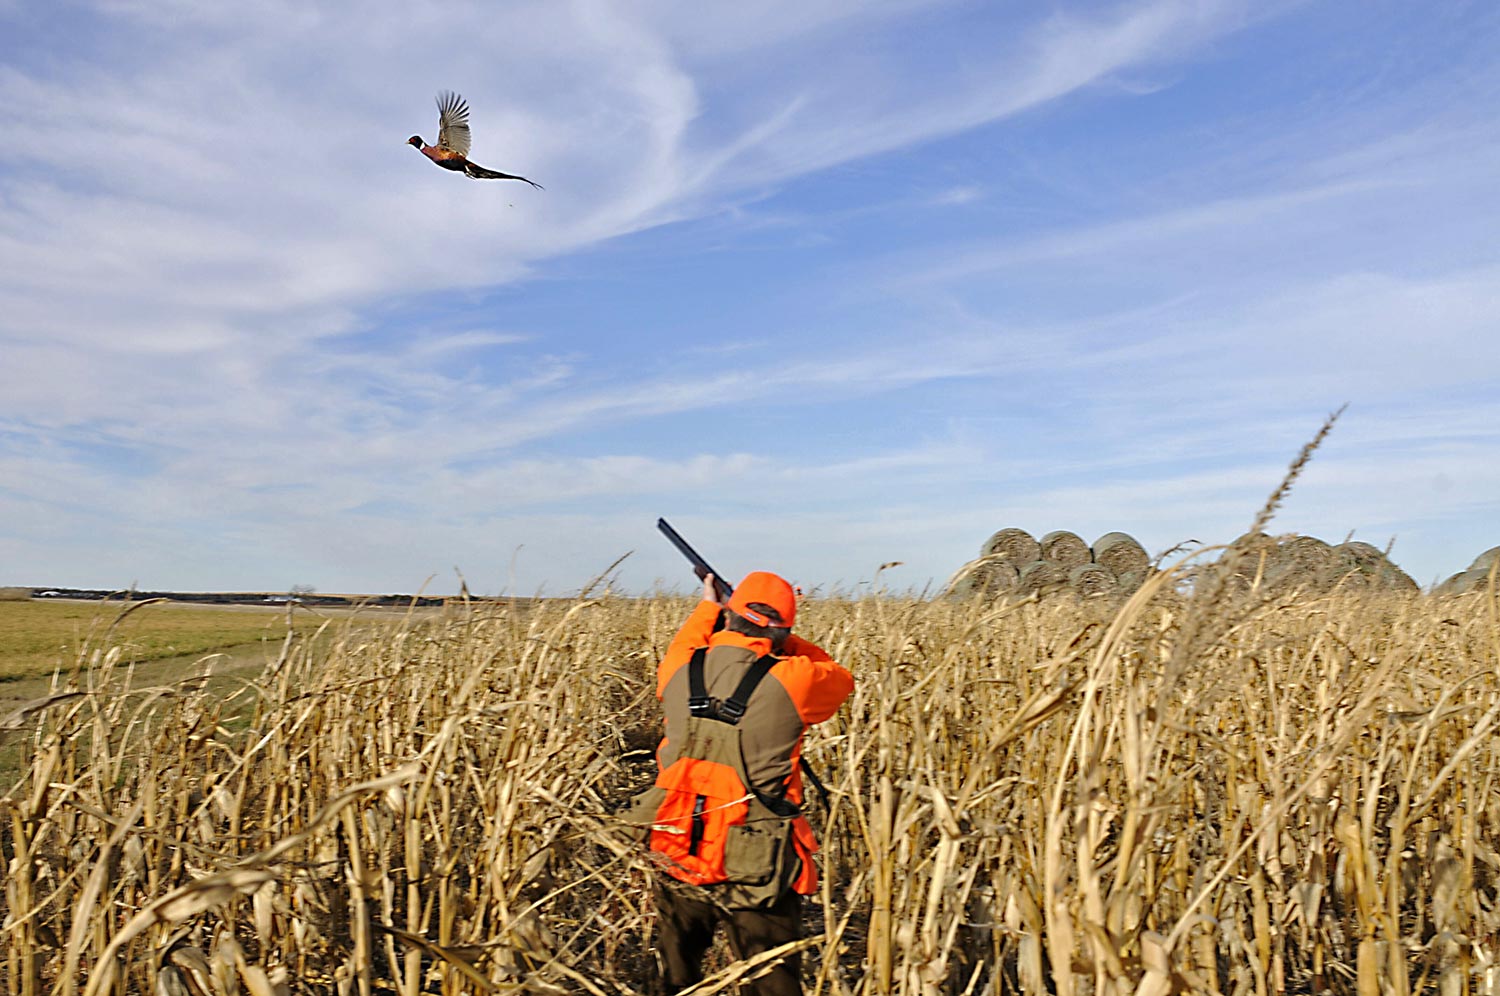 Hunter aiming a shotgun in a field.